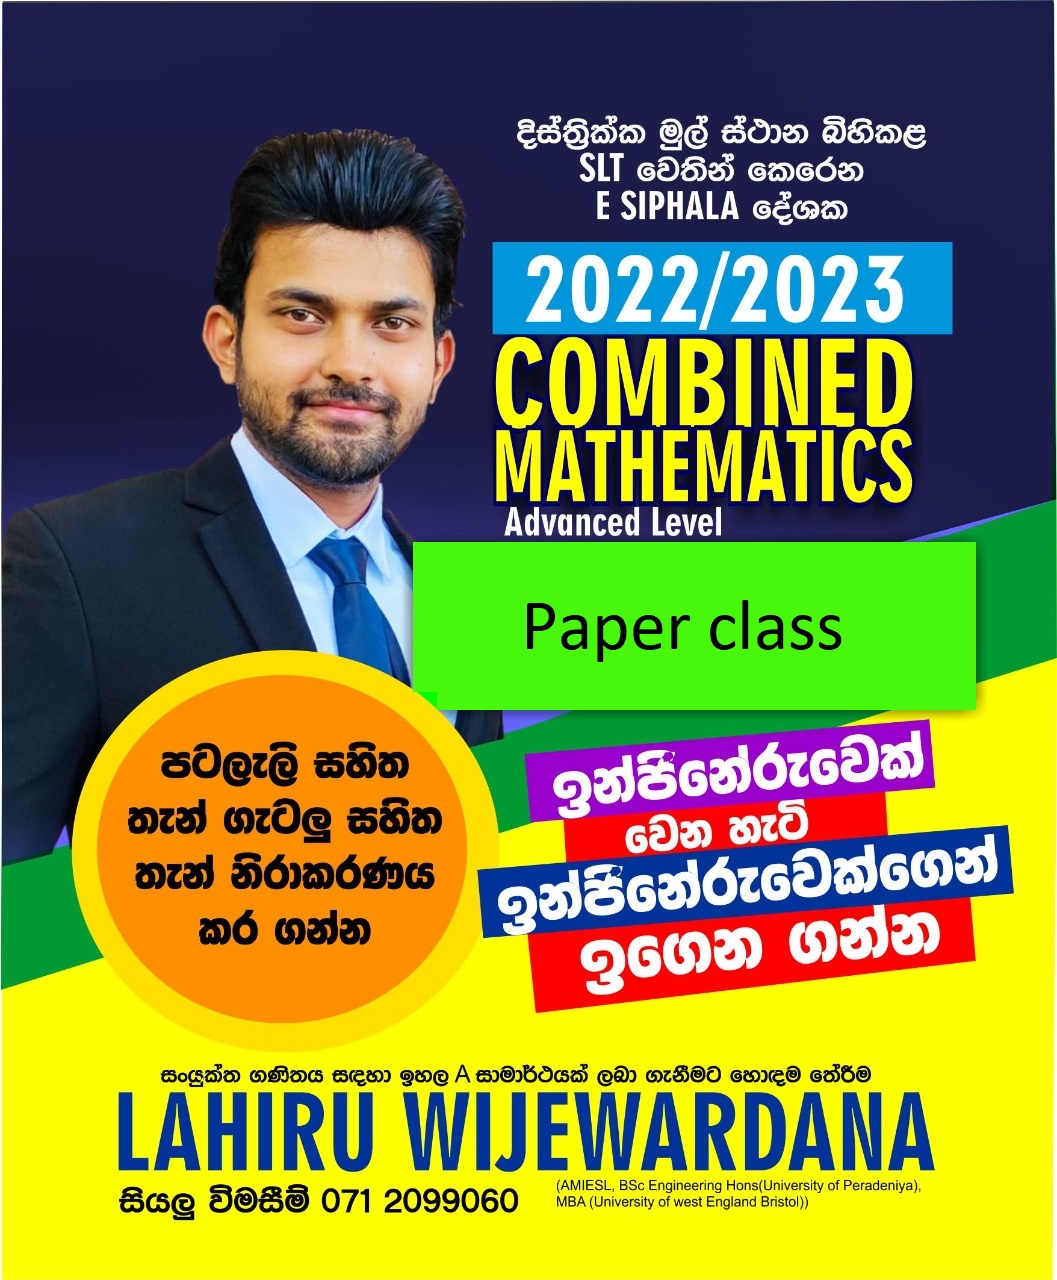 Combined mathematics paper class-April